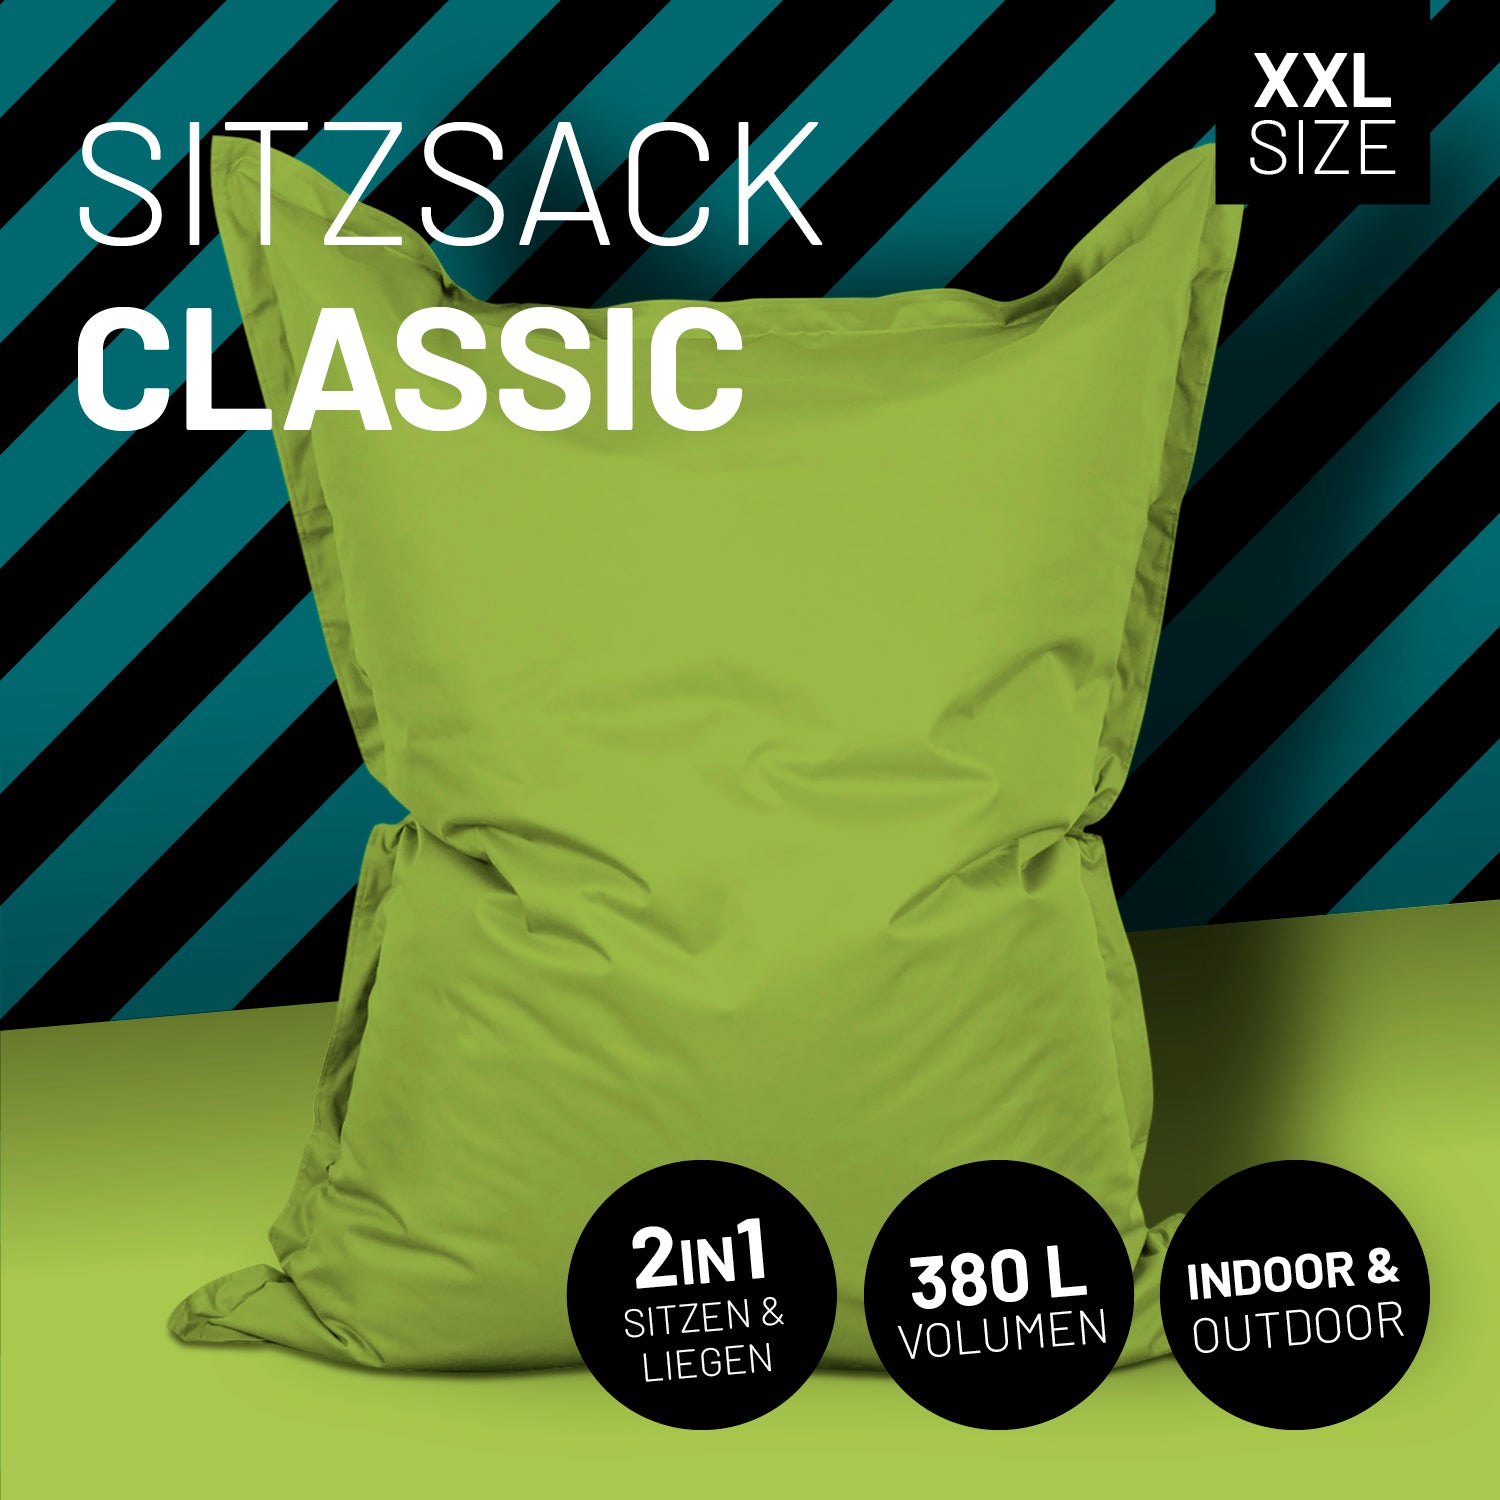 Sitzsack Classic XXL (380 L) - indoor & outdoor - Grün